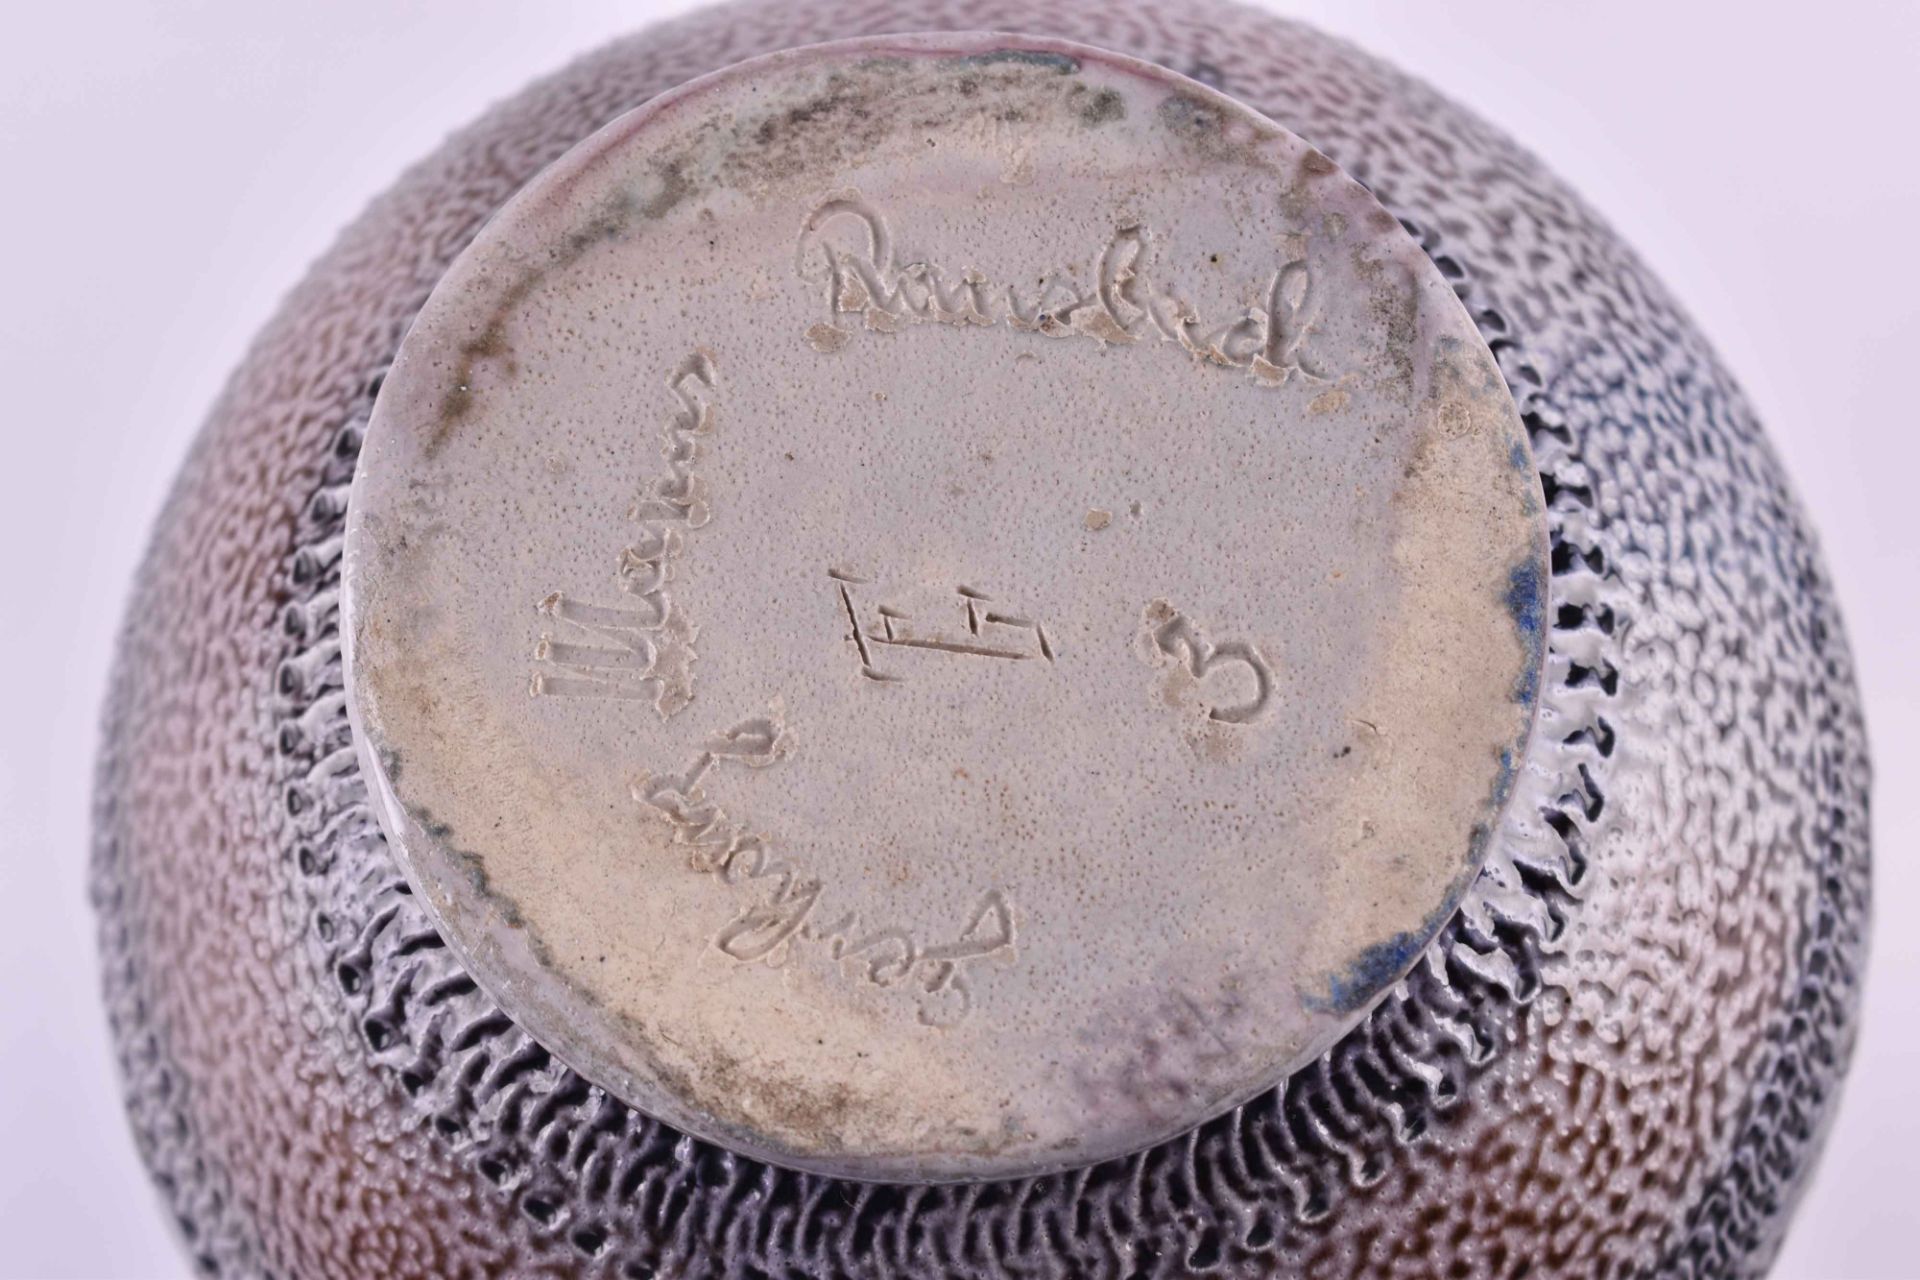 Ceramic mug Pfeiffer Gerhards Ransbachsigned under the bottom, addition a ceramic vase, mug - Bild 4 aus 5